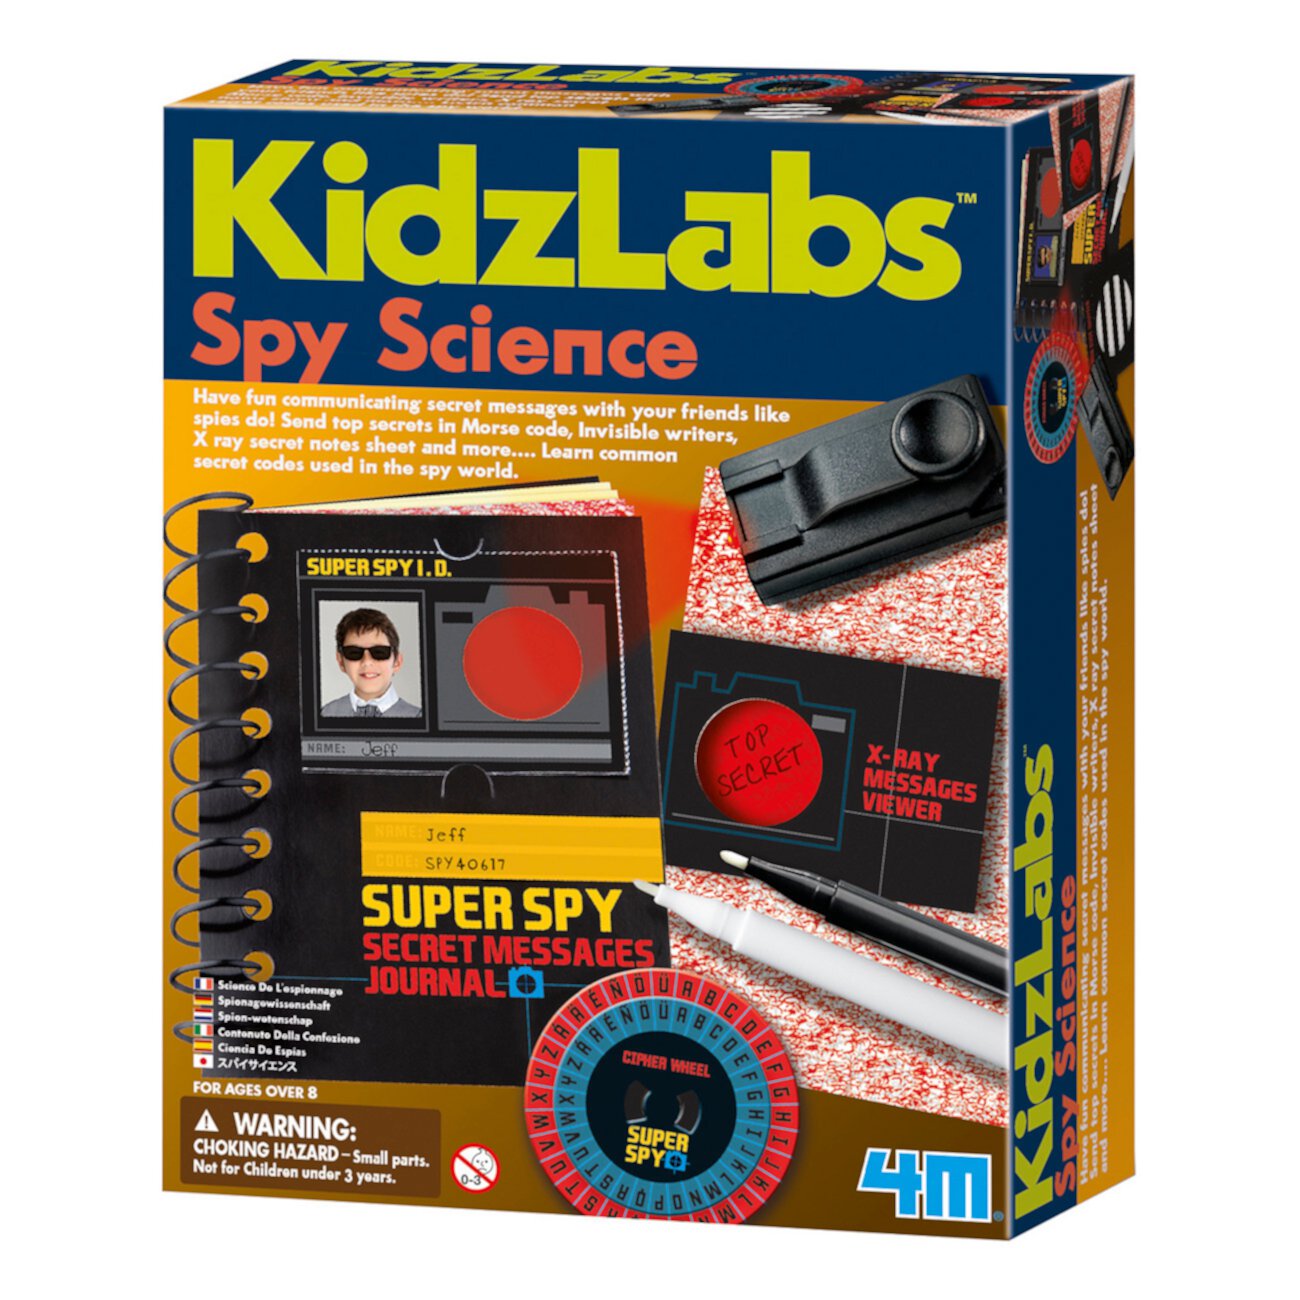 Kidzlabs Spy Science Секретный набор сообщений Redbox